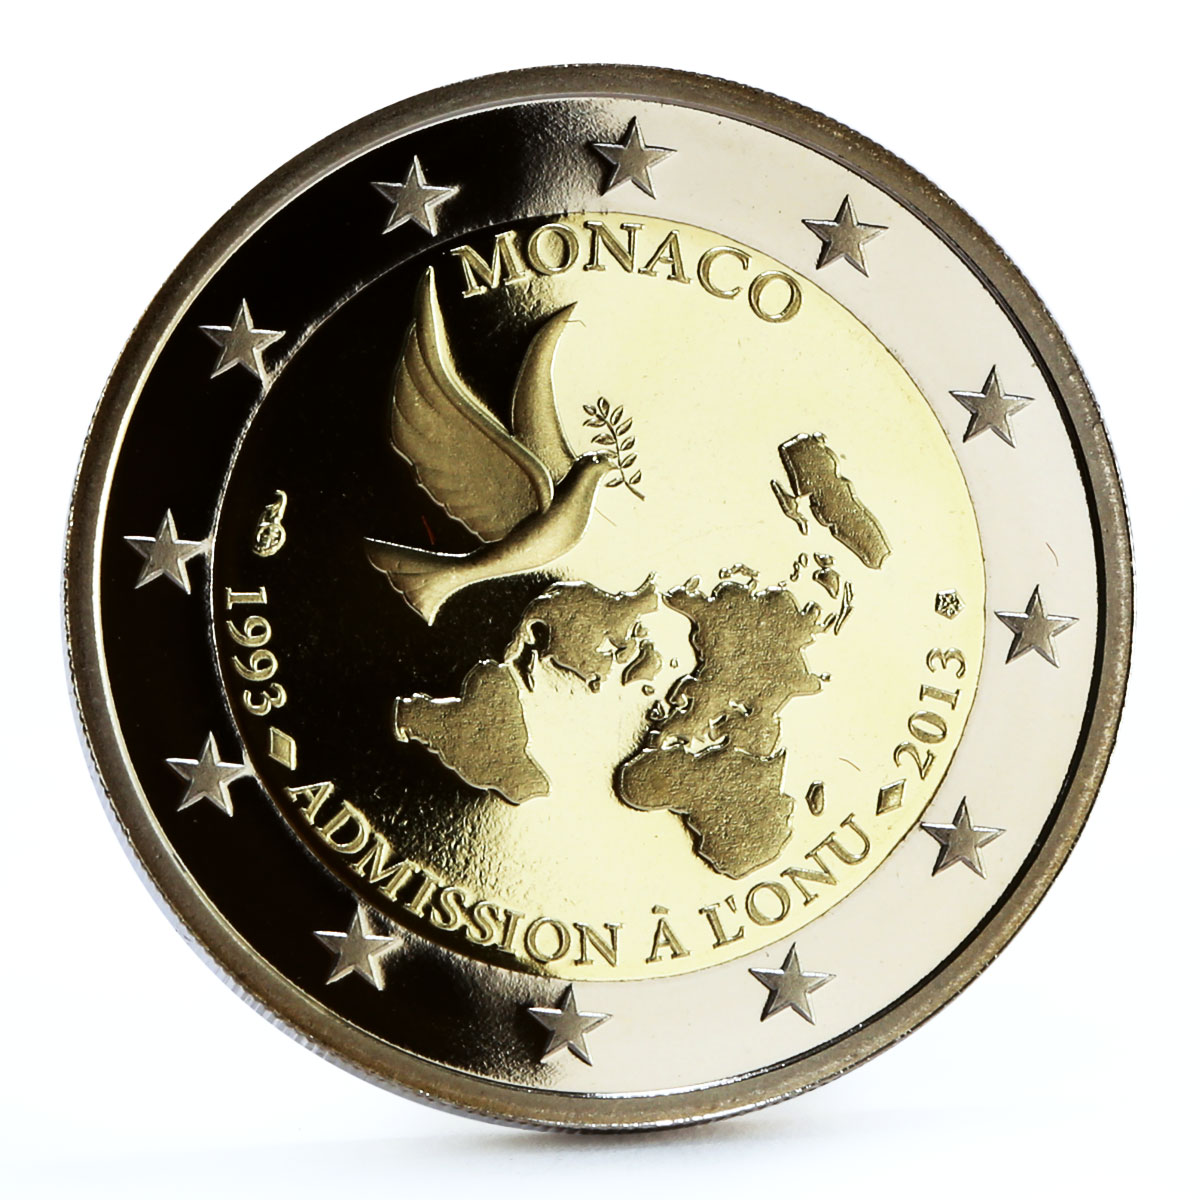 Monaco 2 euro Accession to the United Nations Dove Bird proof CuNi coin 2013